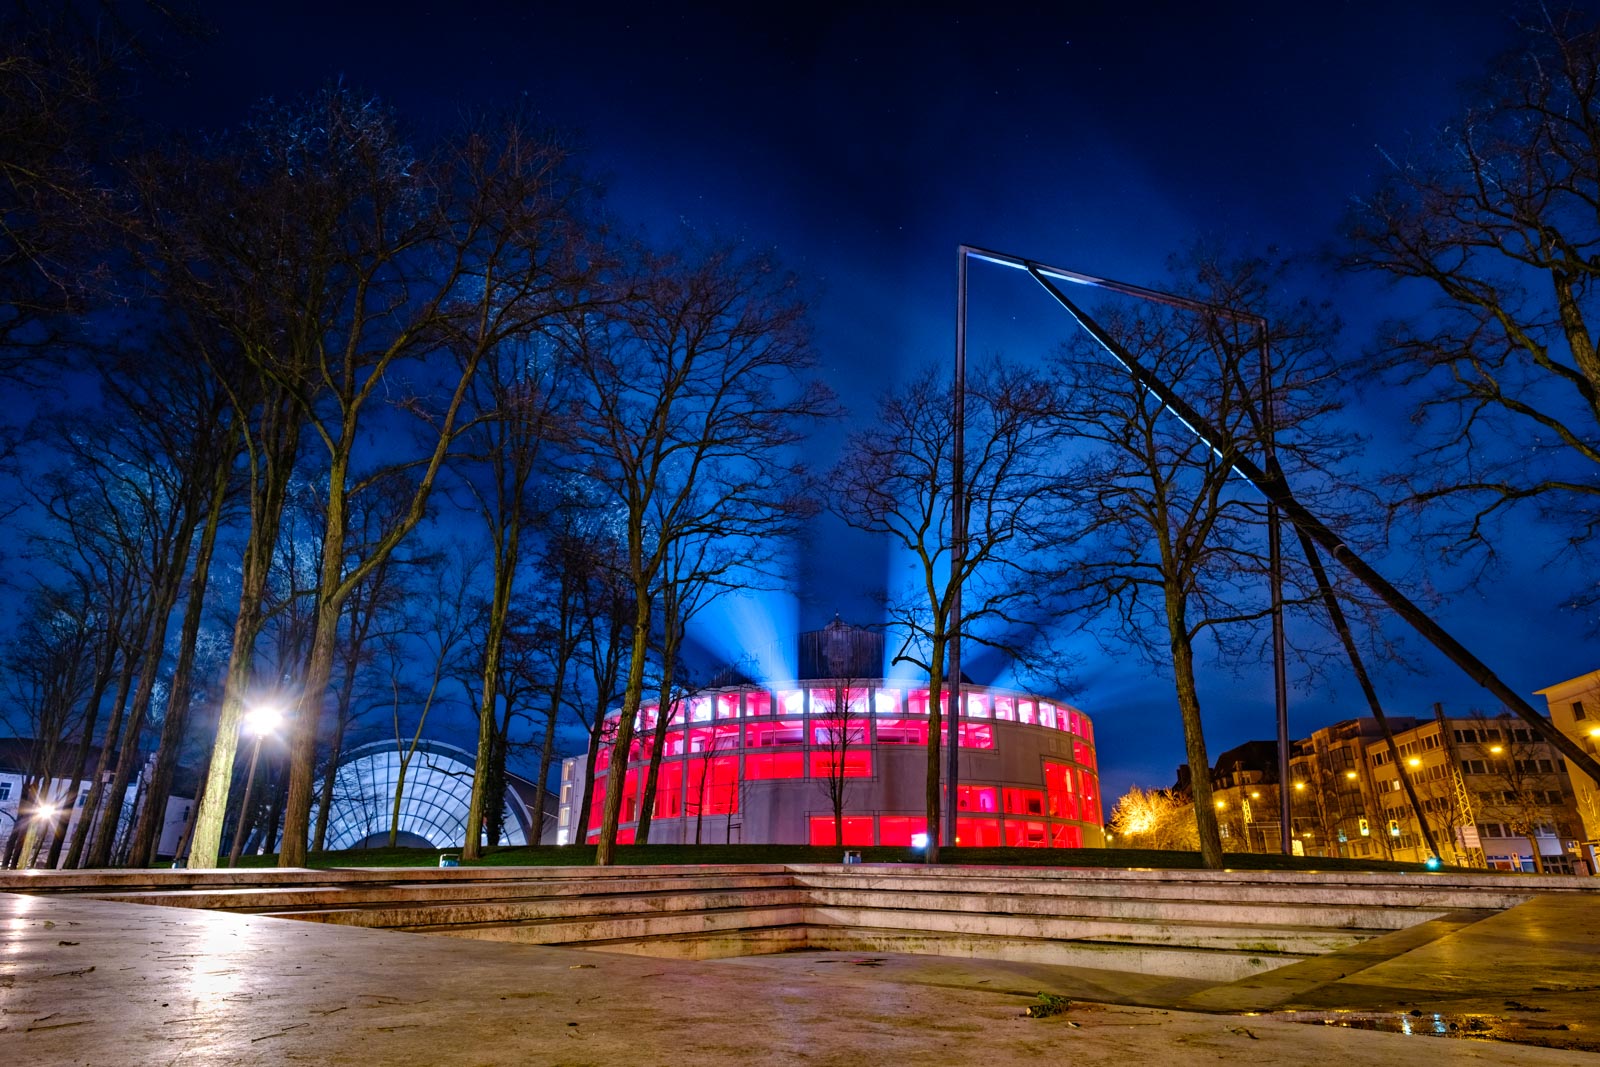 Conference hall (Stadthalle) on December 26, 2020 (Bielefeld, Germany).